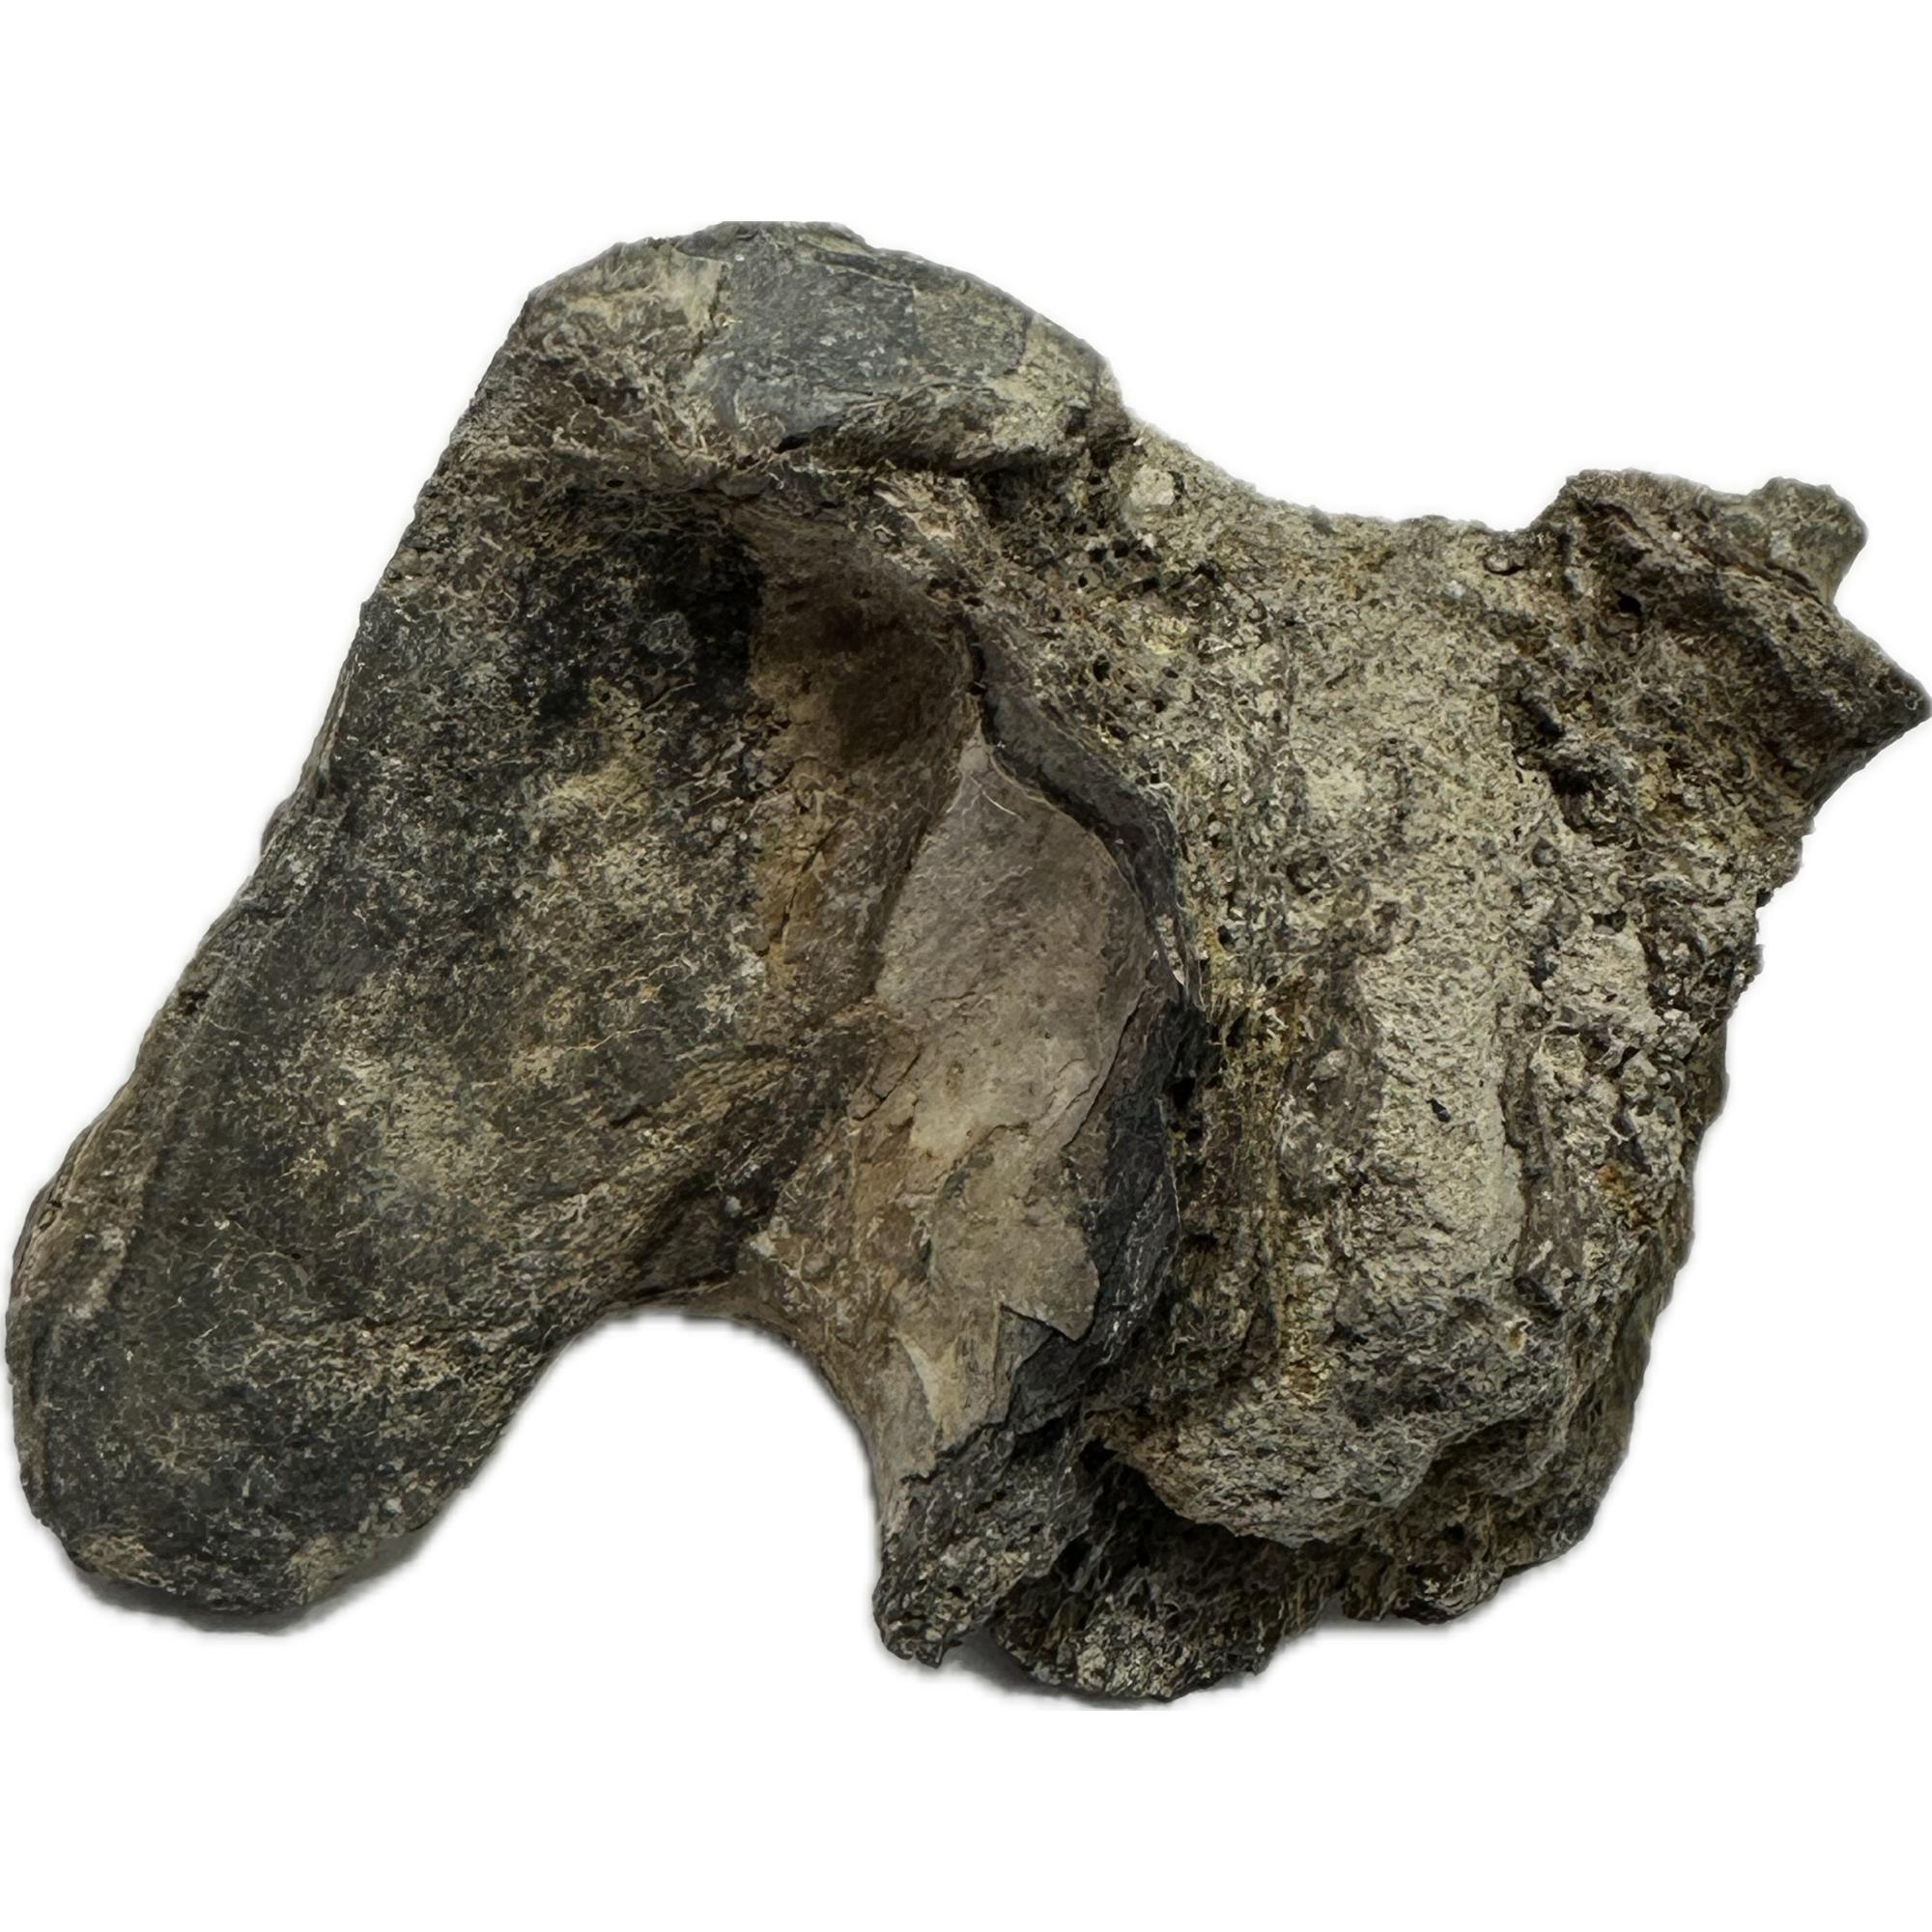 Alligator fossil partial Metapodial bone, Florida Prehistoric Online